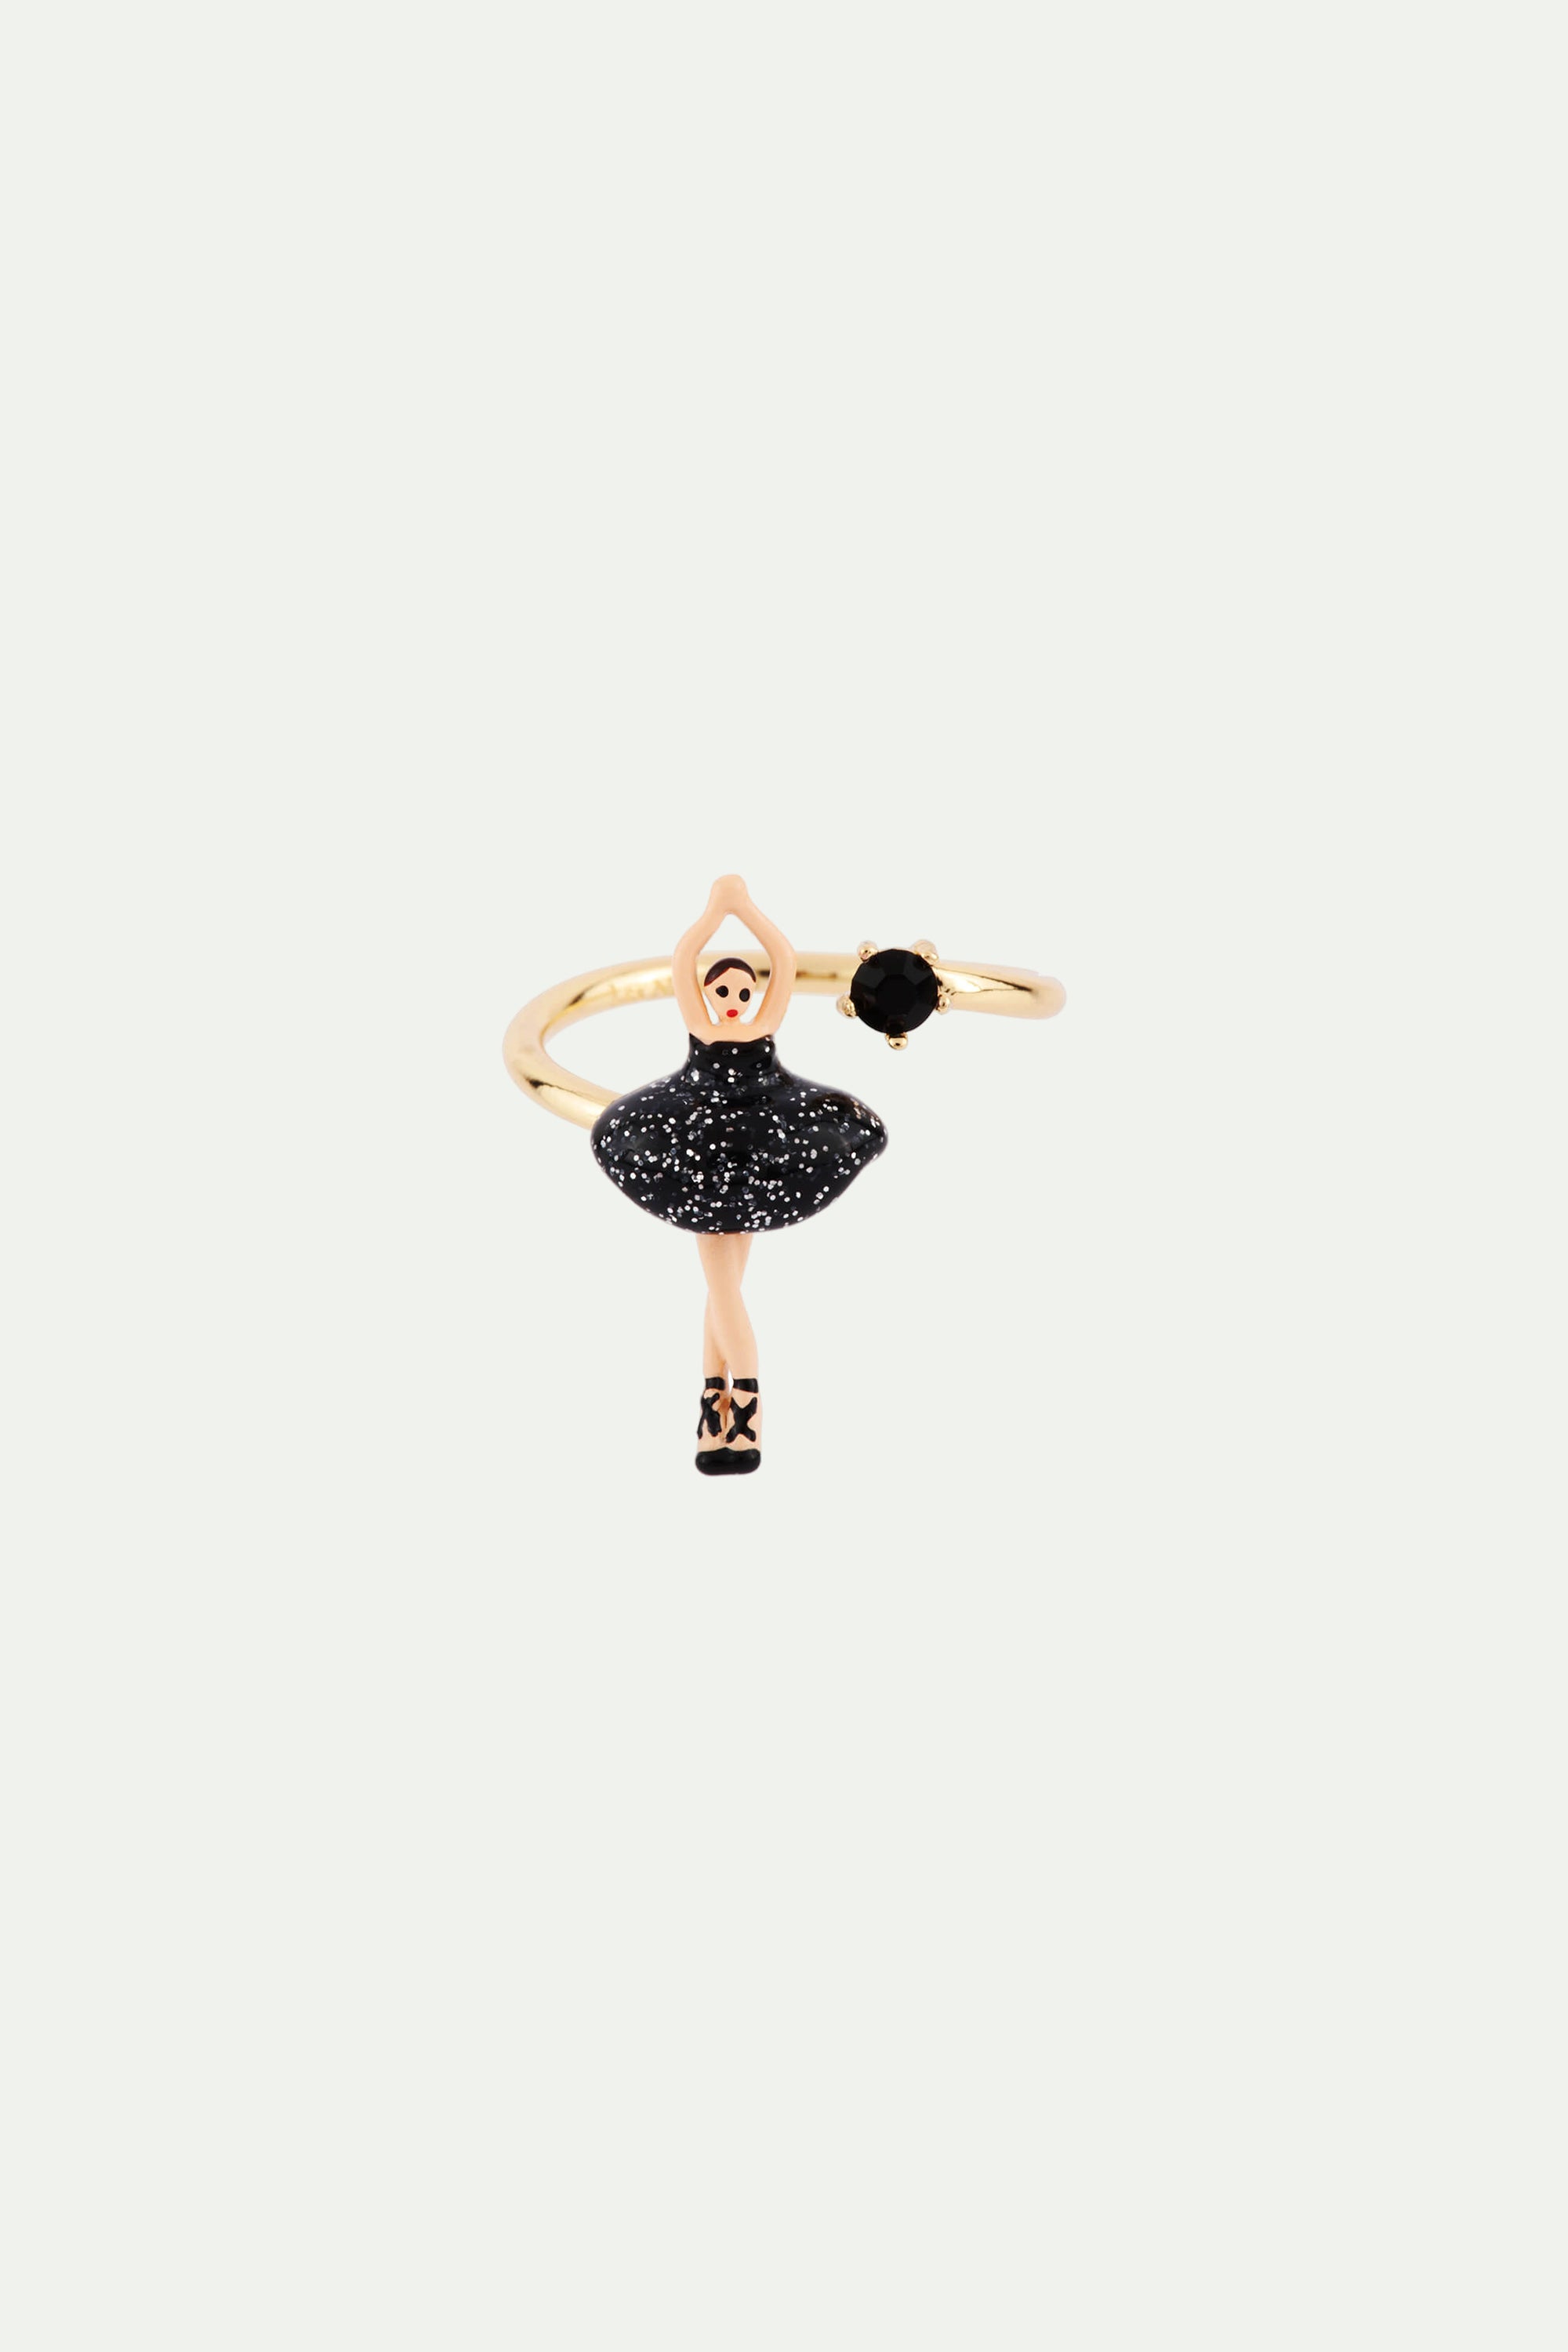 Anillo regulable mini bailarina con tutú negro